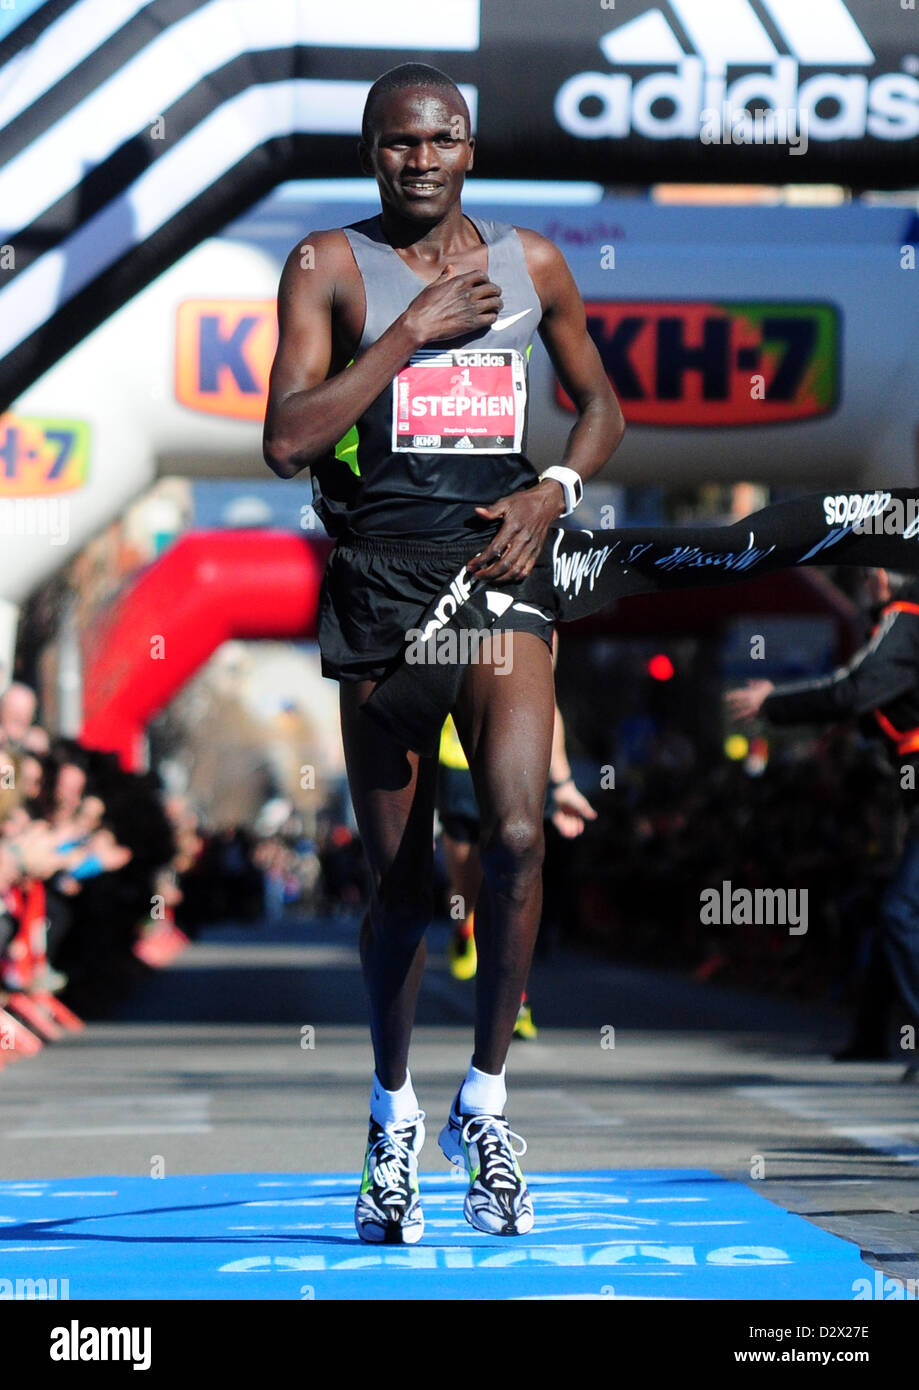 Mitja- Half marathon Granollers (Barcelona, Spain. Feb 3rd, 2013) Ugandan  Stephen Kiprotich winning the race with a personal best time of 1h 01'15''  Stock Photo - Alamy